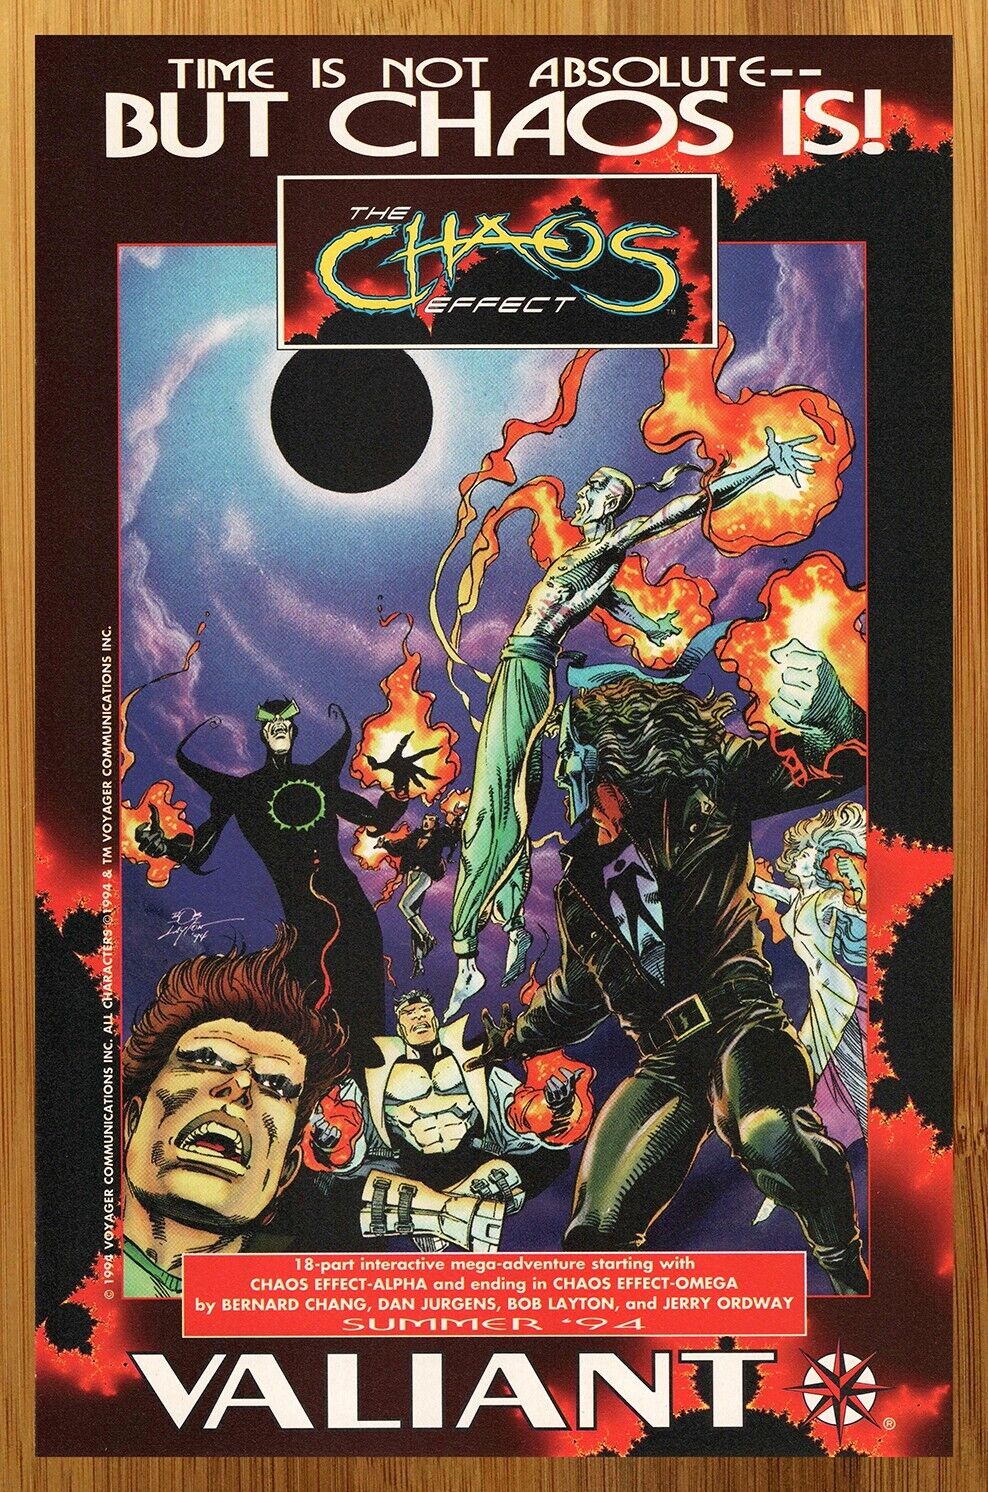 1994 Valiant Comics The Chaos Effect Vintage Print Ad/Poster Promo Art 90s Retro